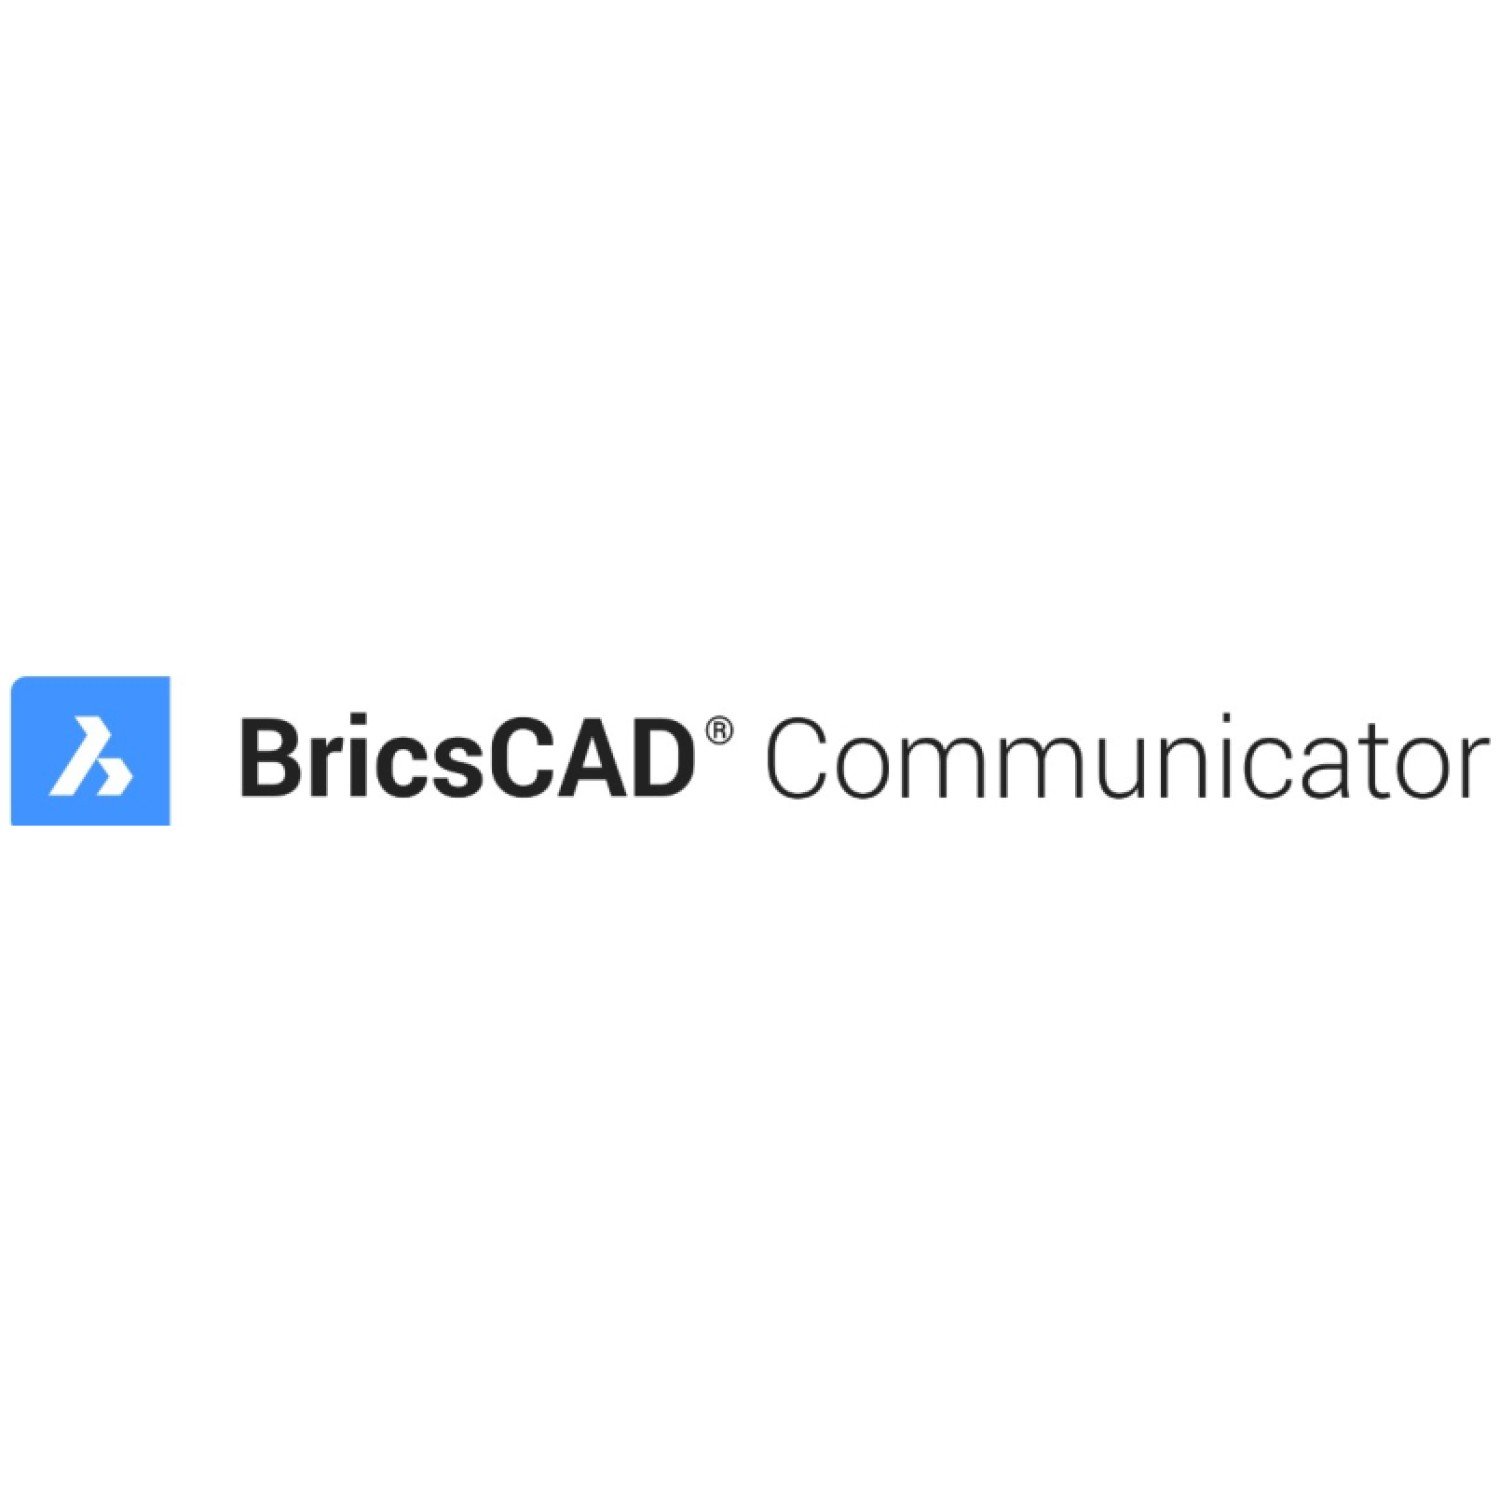 Communicator for BricsCAD including Maintenance network